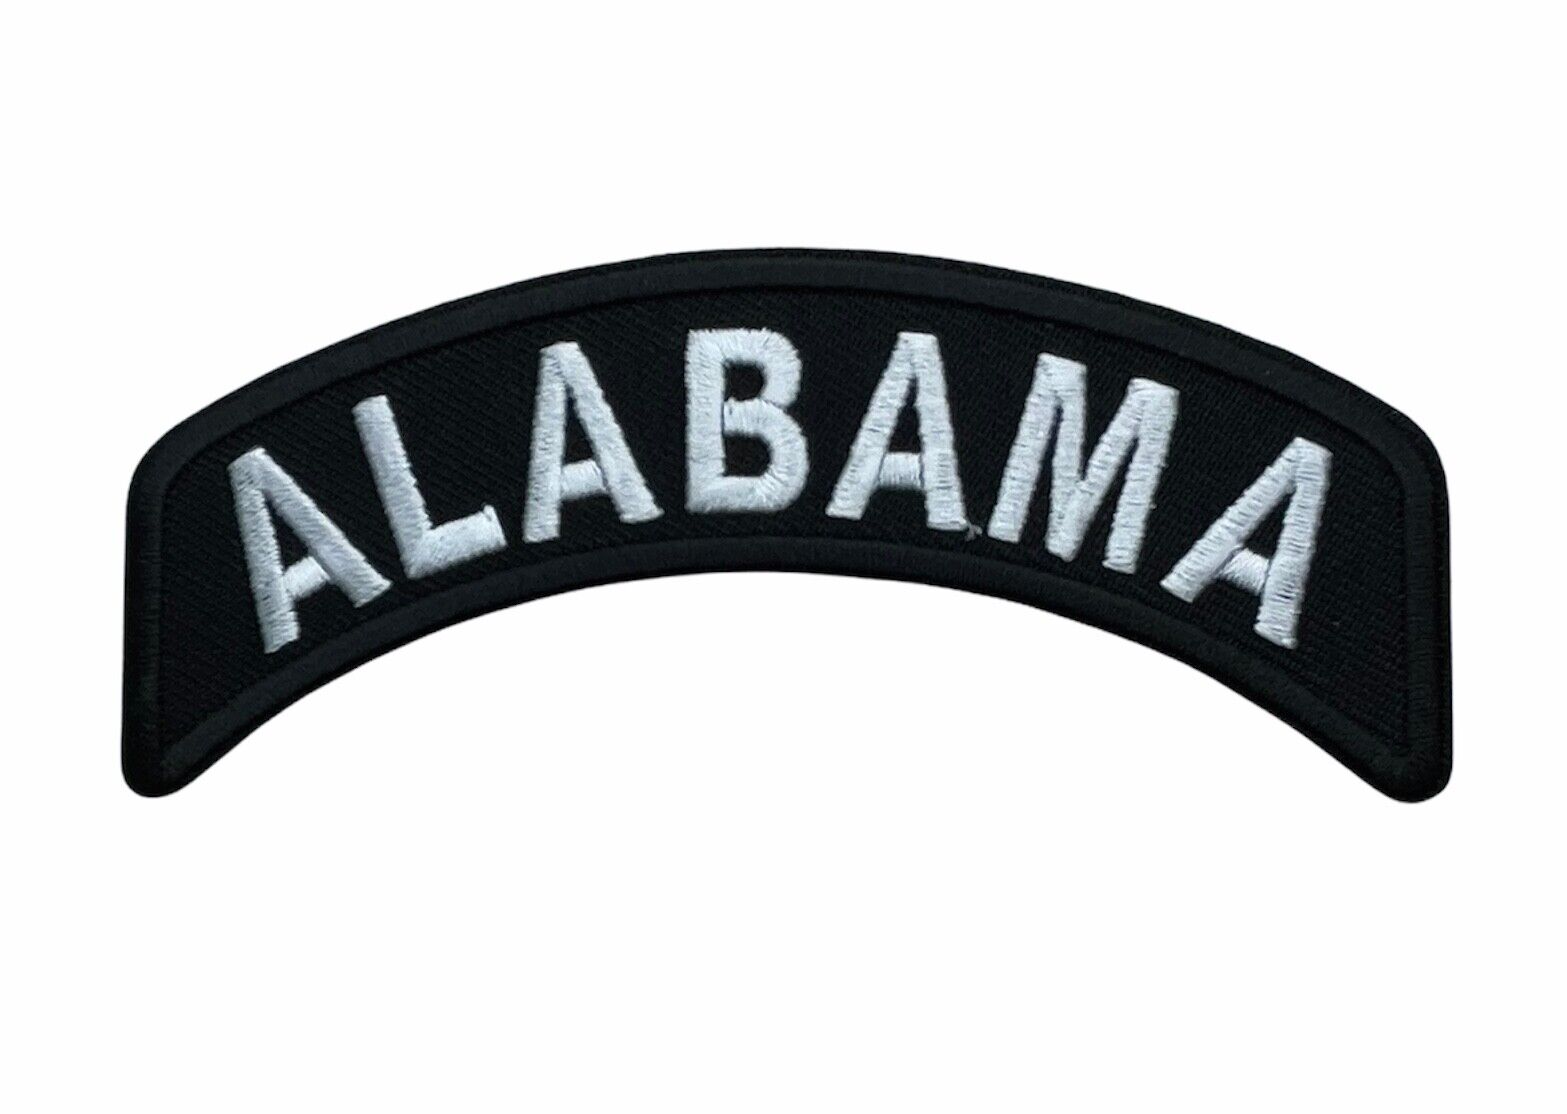 Alabama AL State Rocker Patch IVA1428 F5D20P